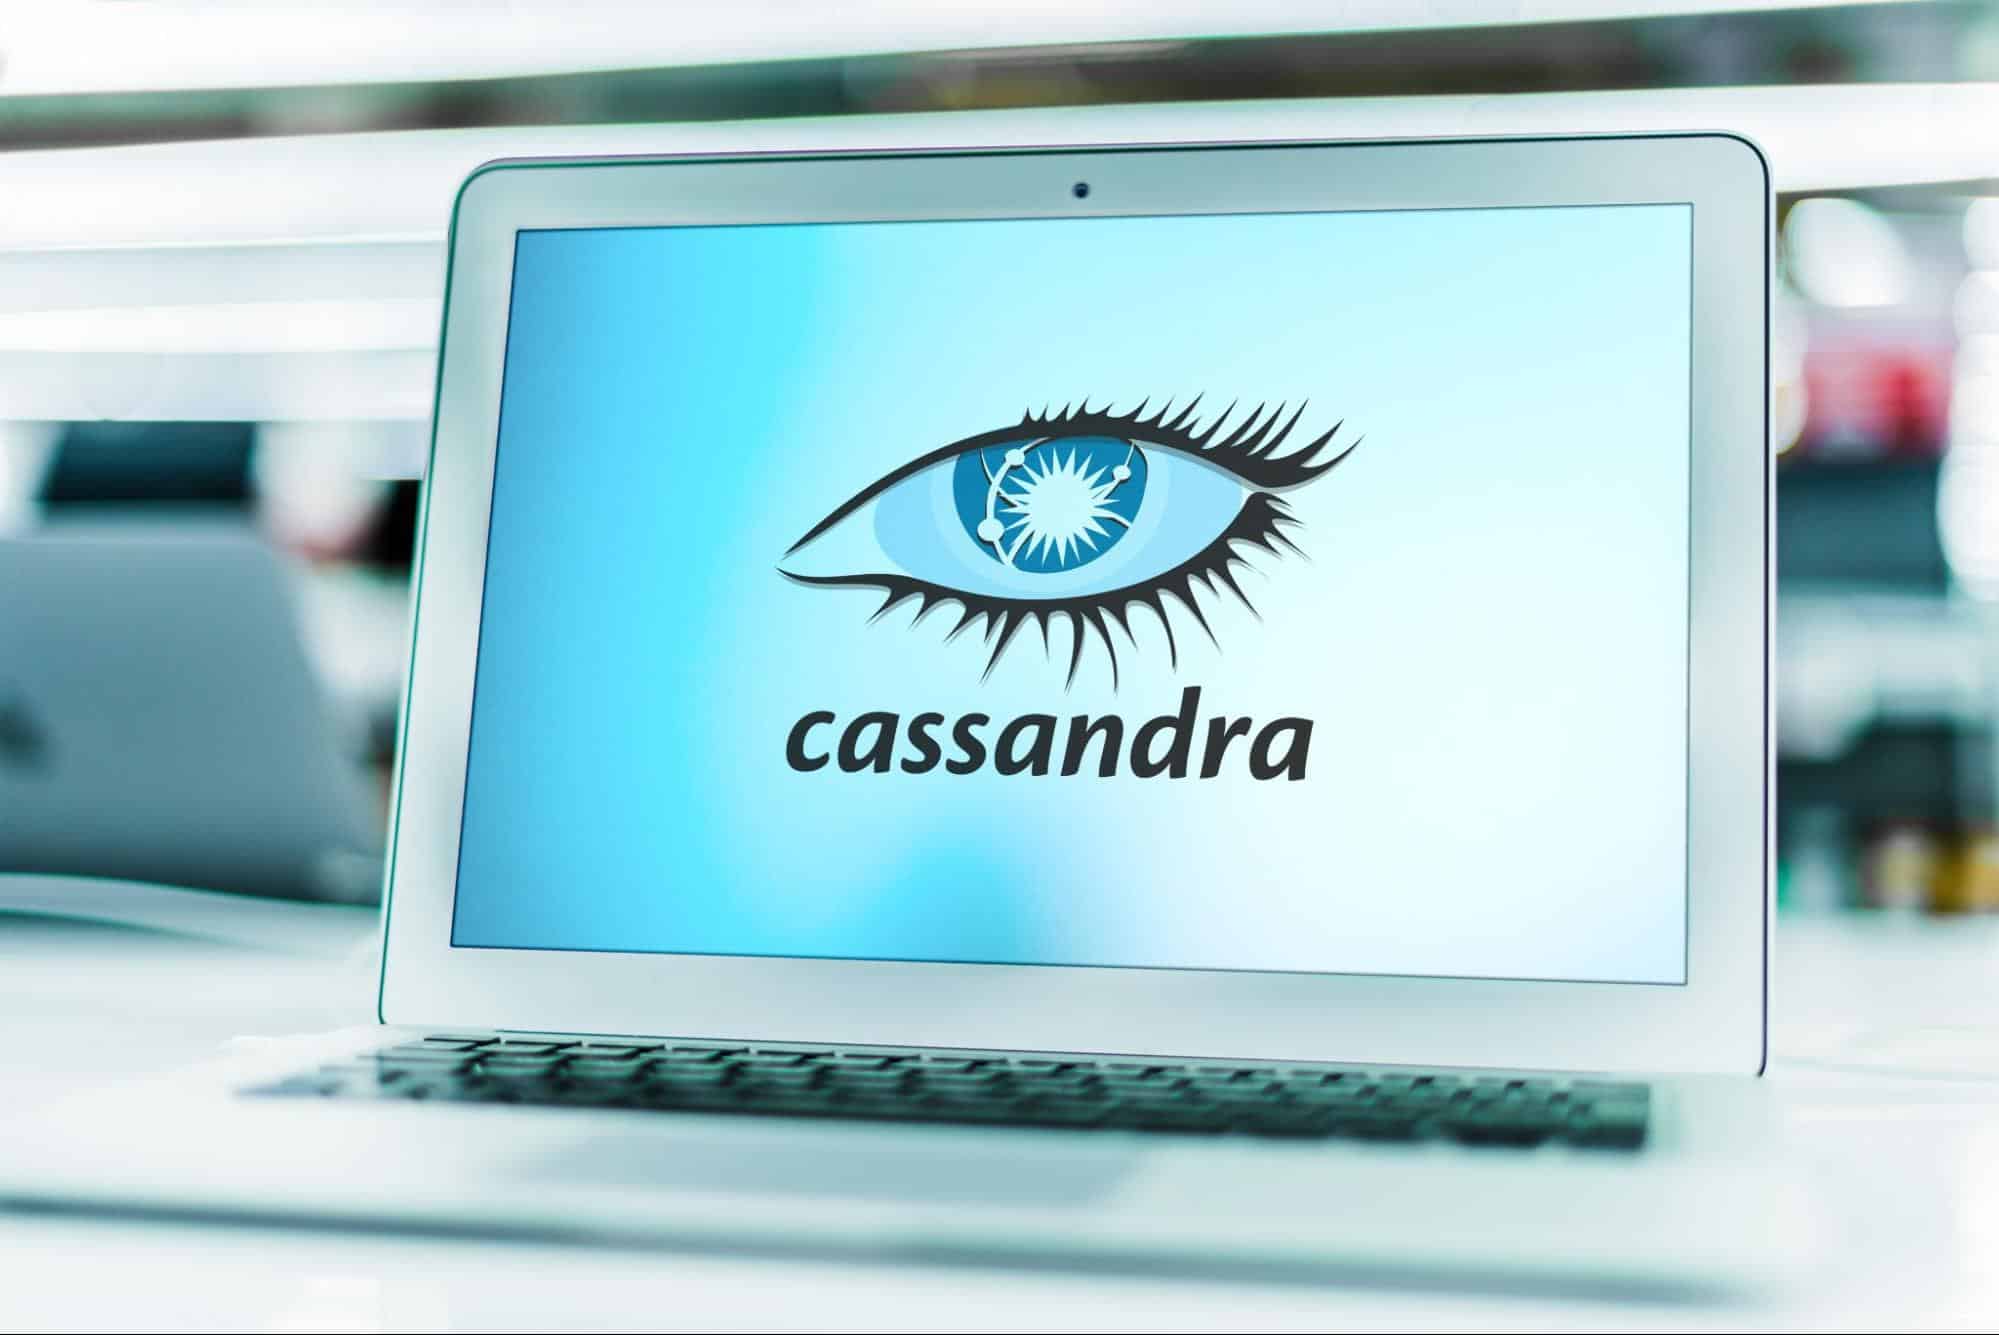 What is Cassandra